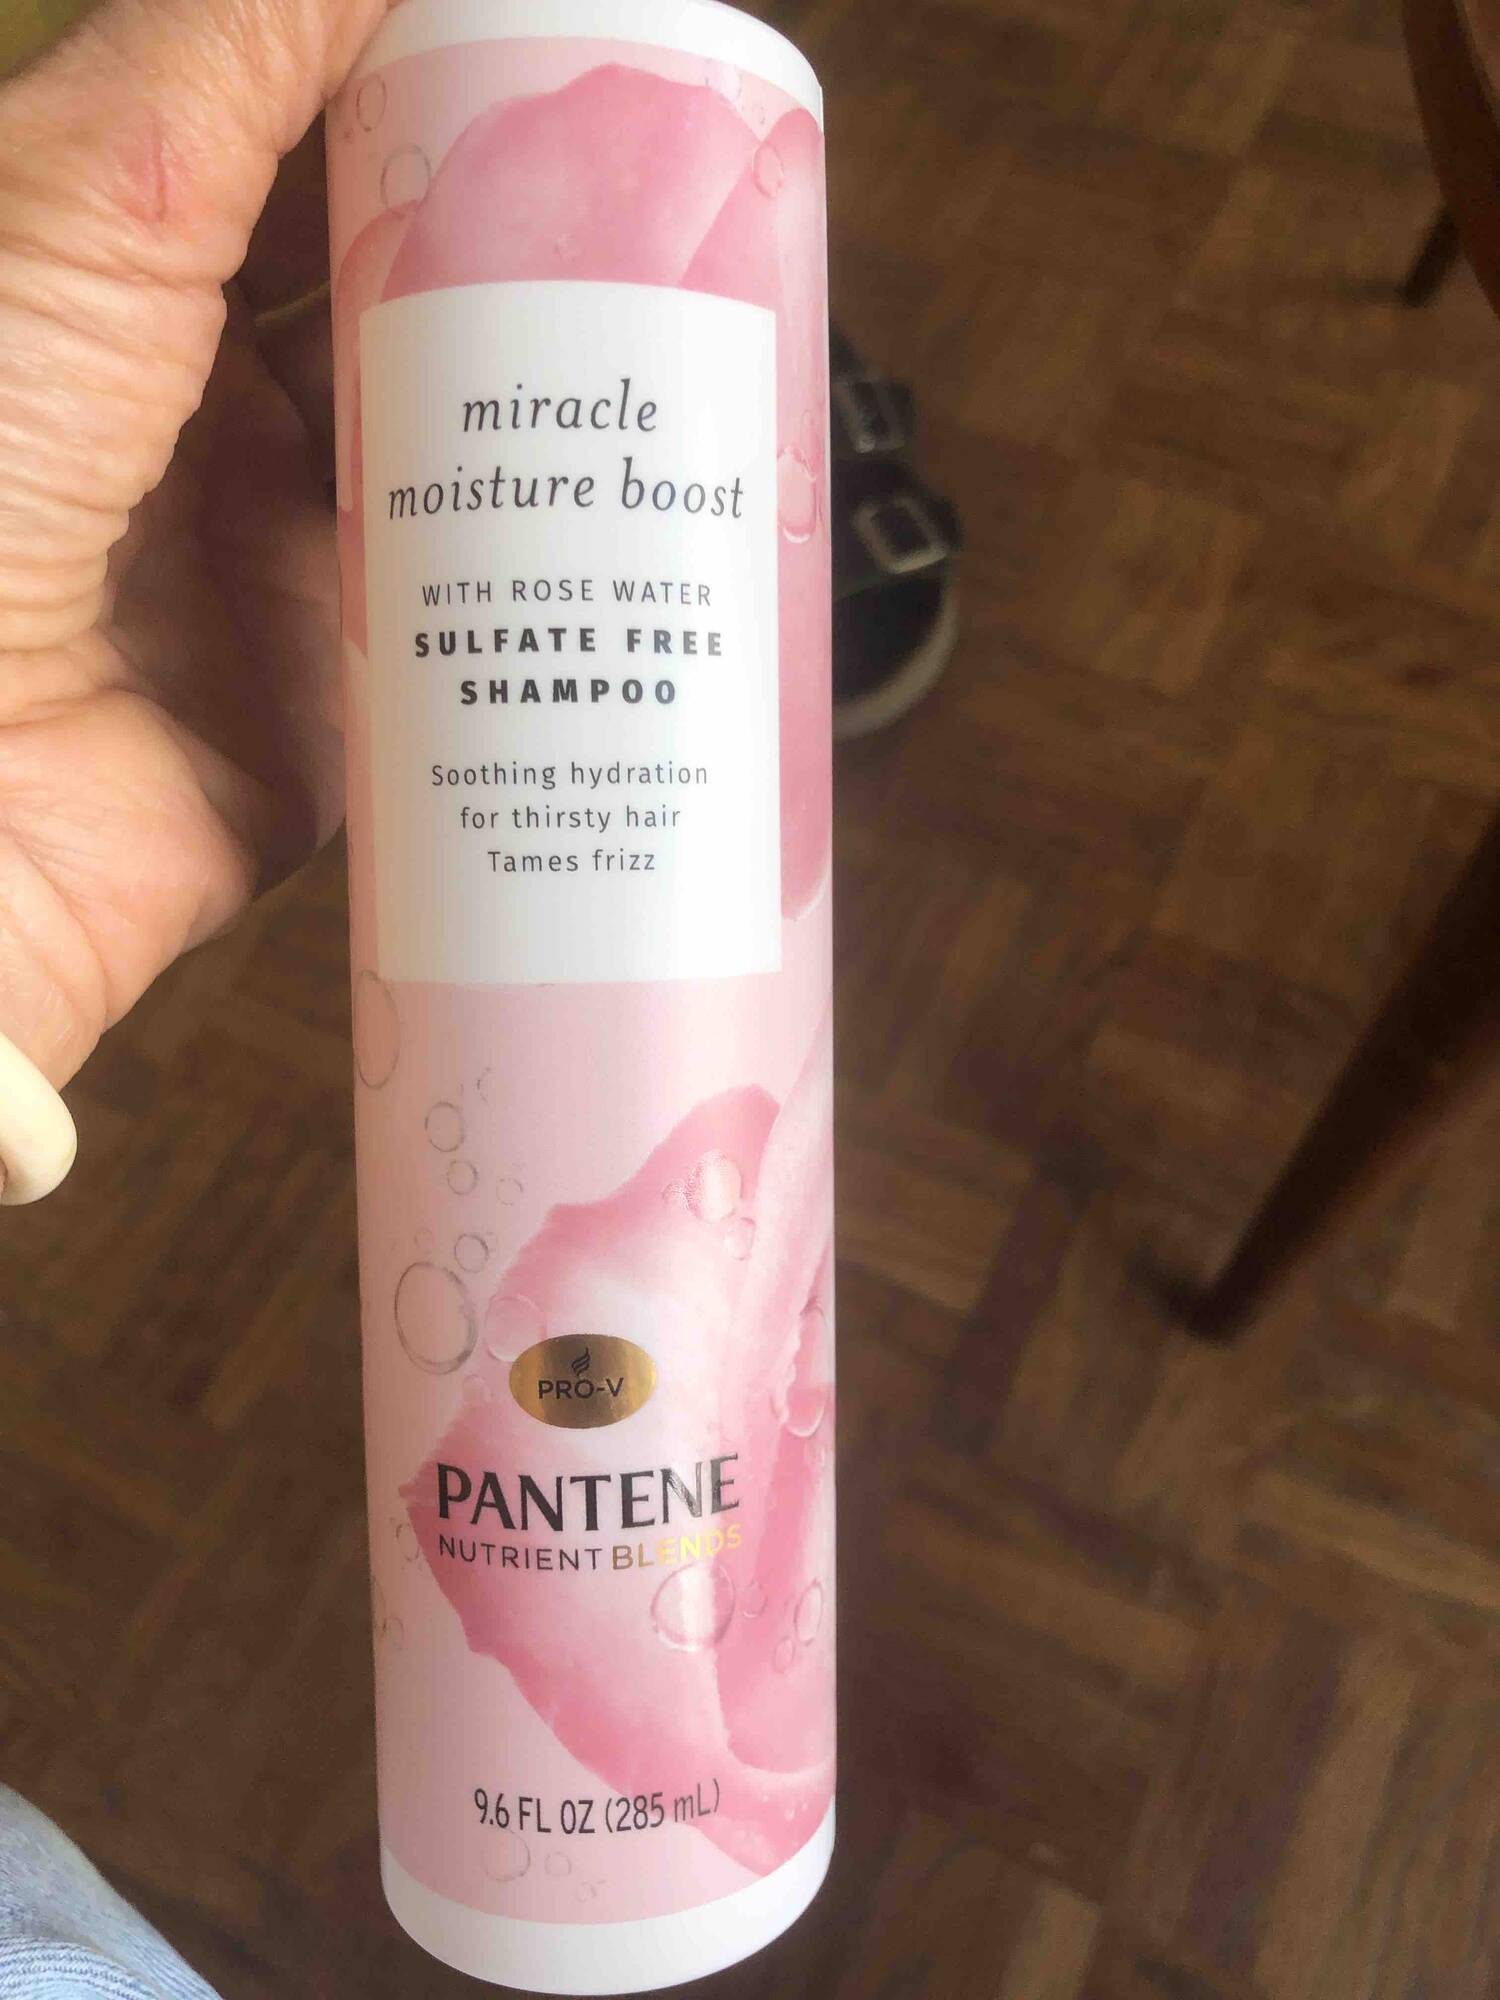 PANTENE - Miracle moisture boost shampoo